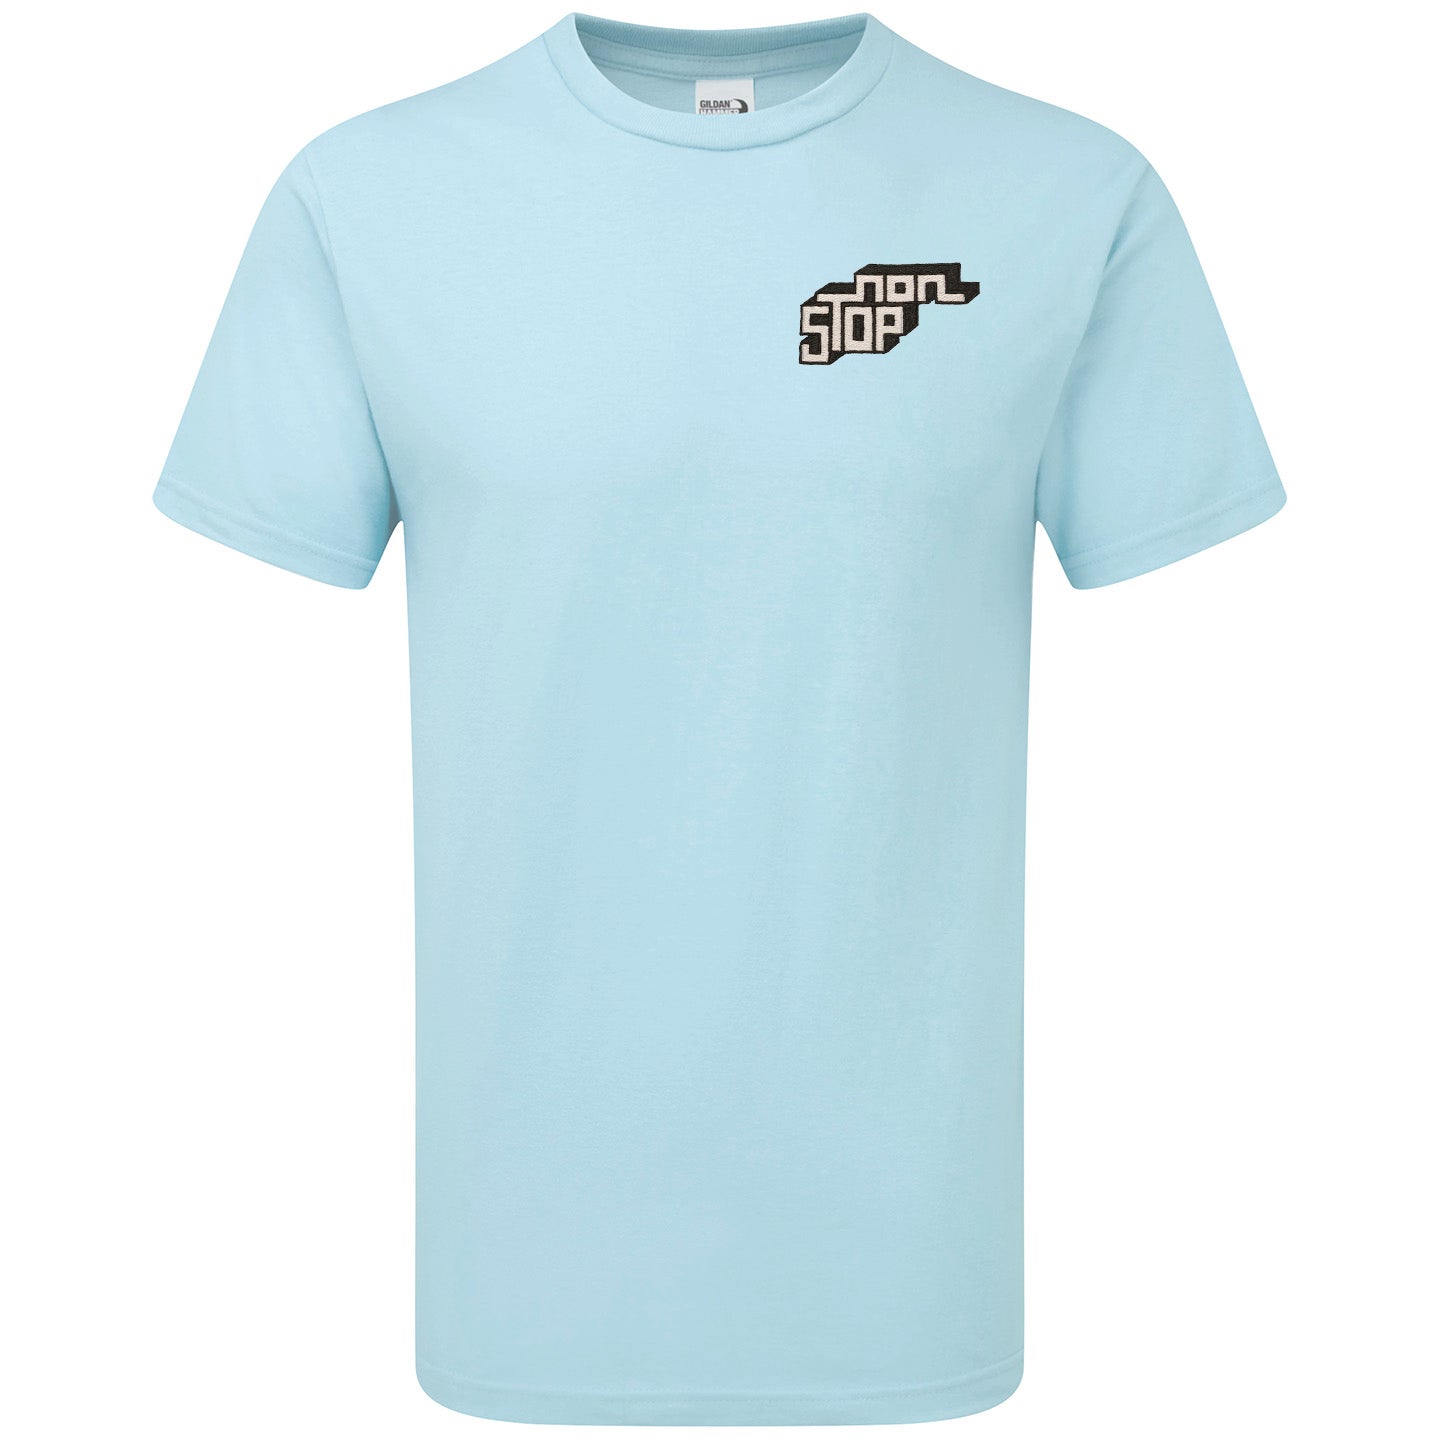 Nonstop T-Shirt Patch - chambrey blue